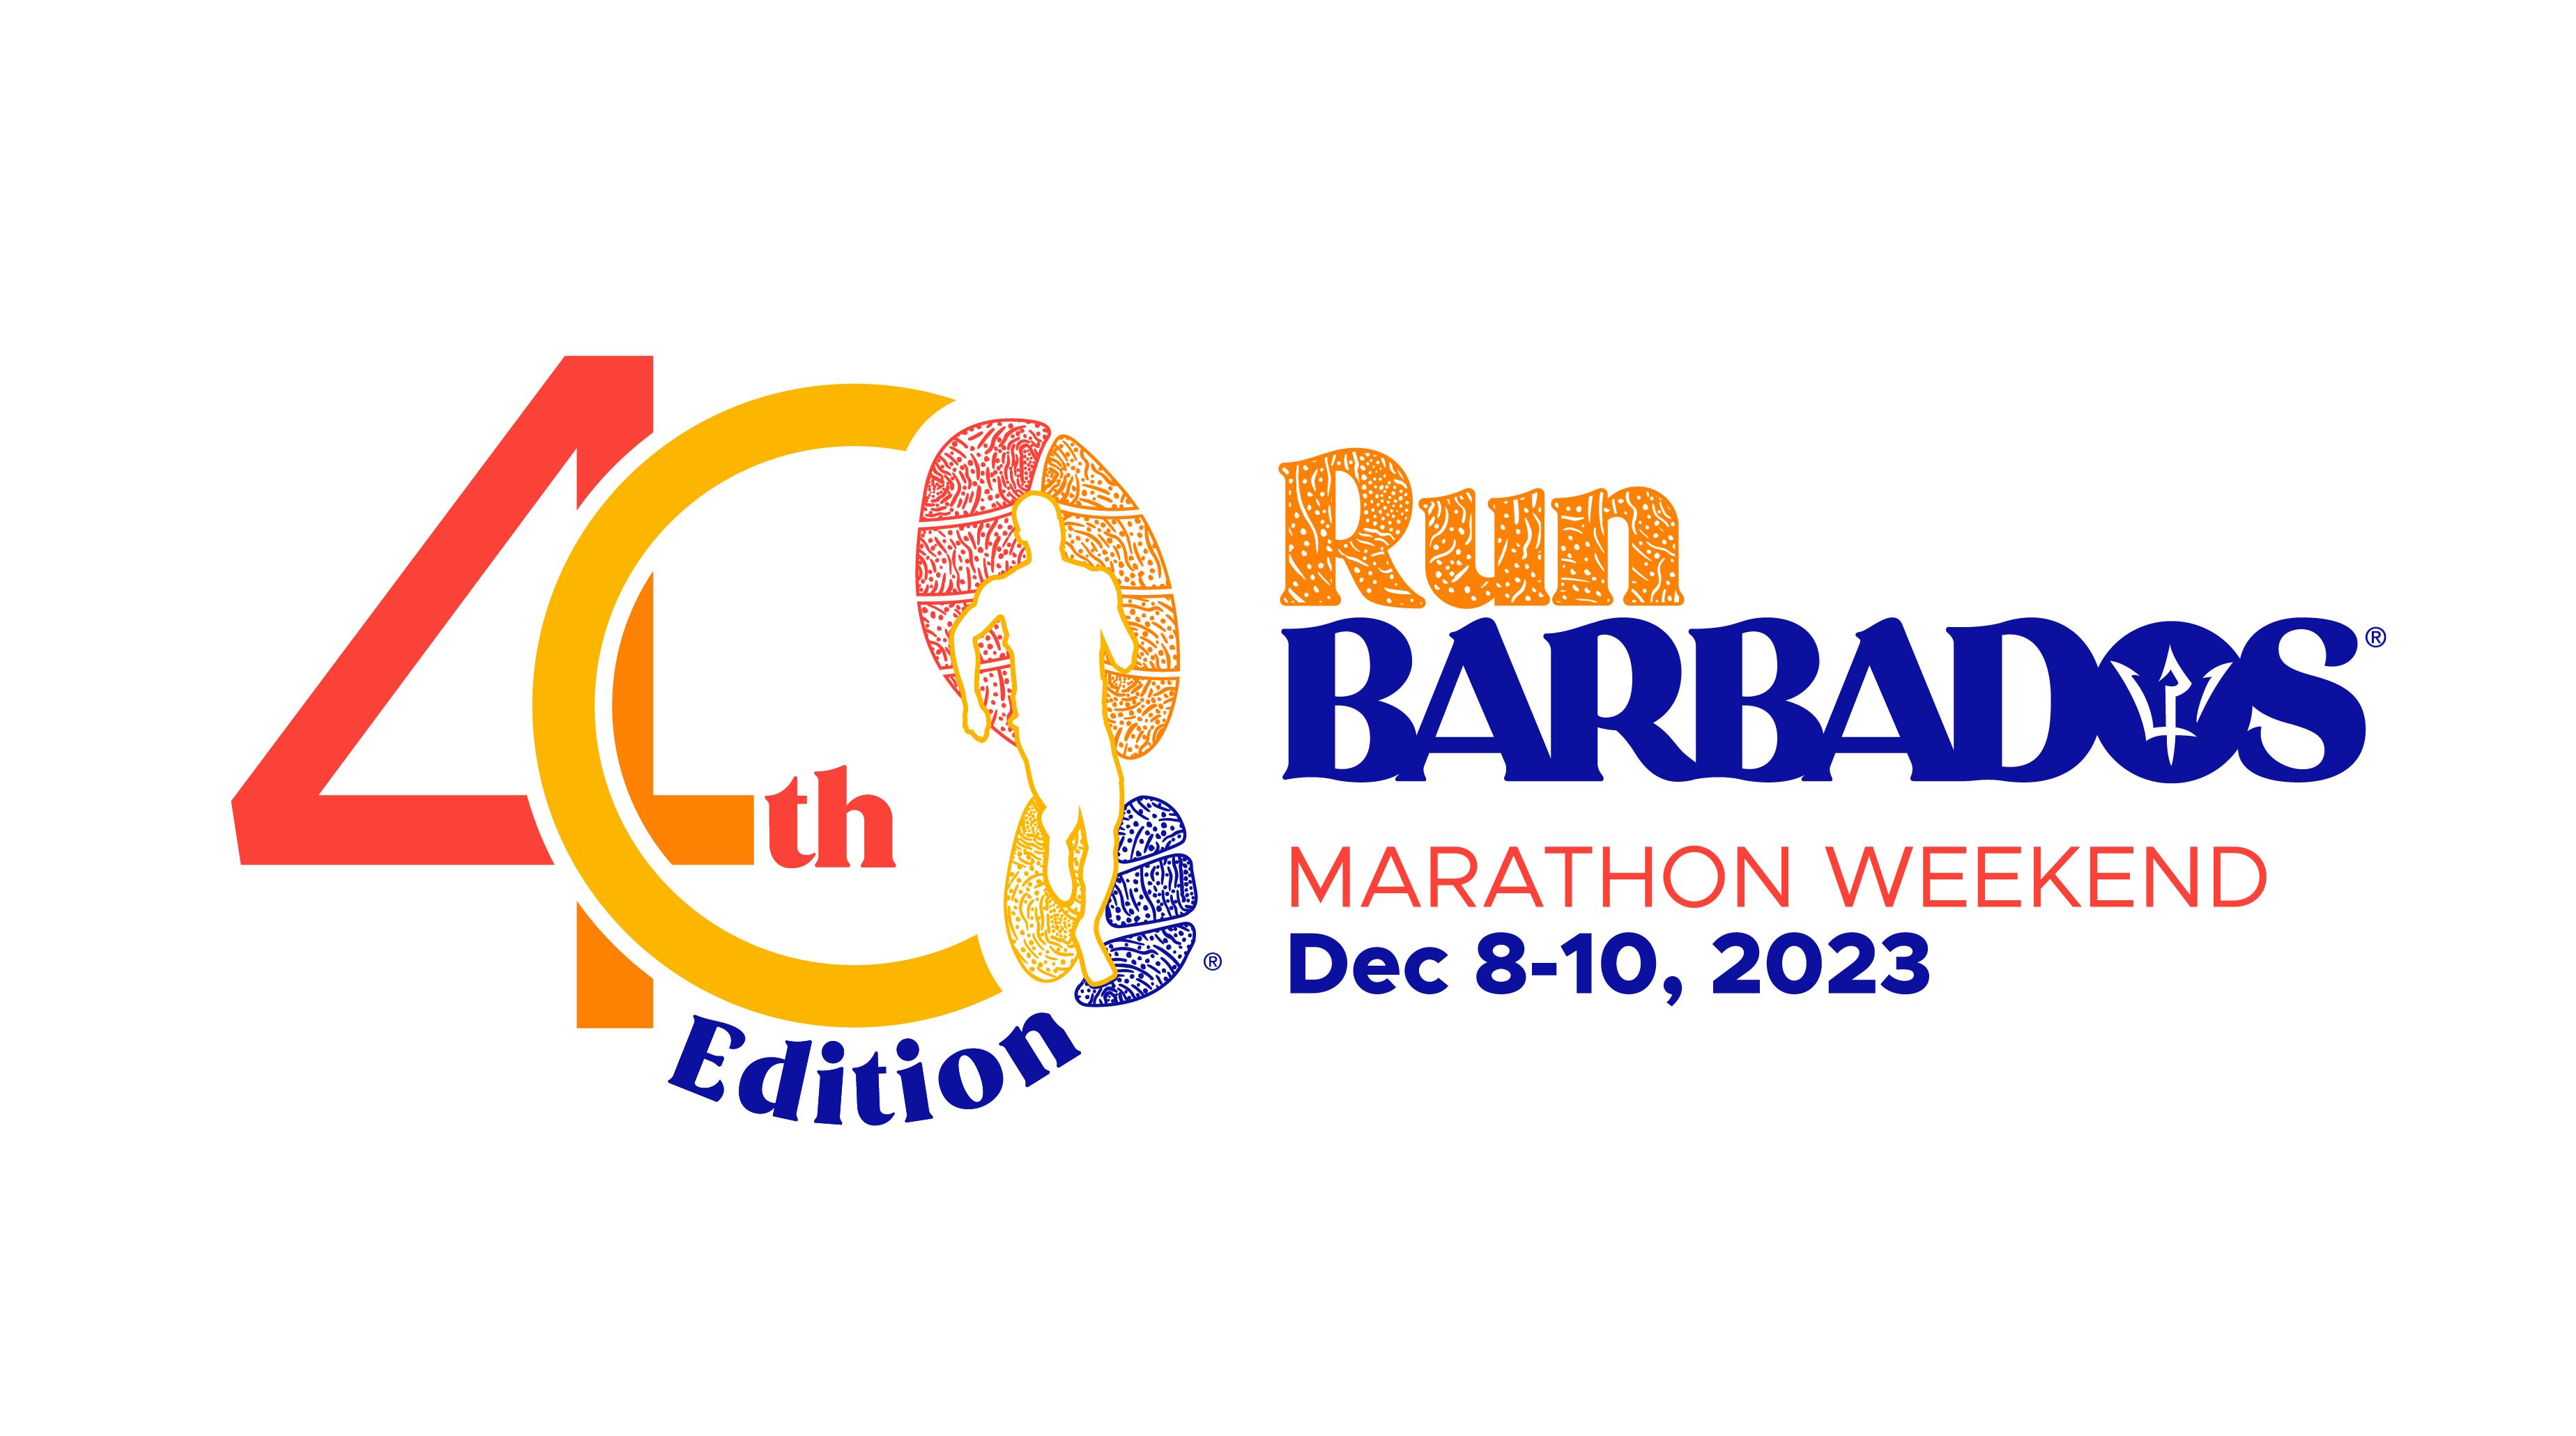 Ejecutar Barbados - Fin de semana de maratón